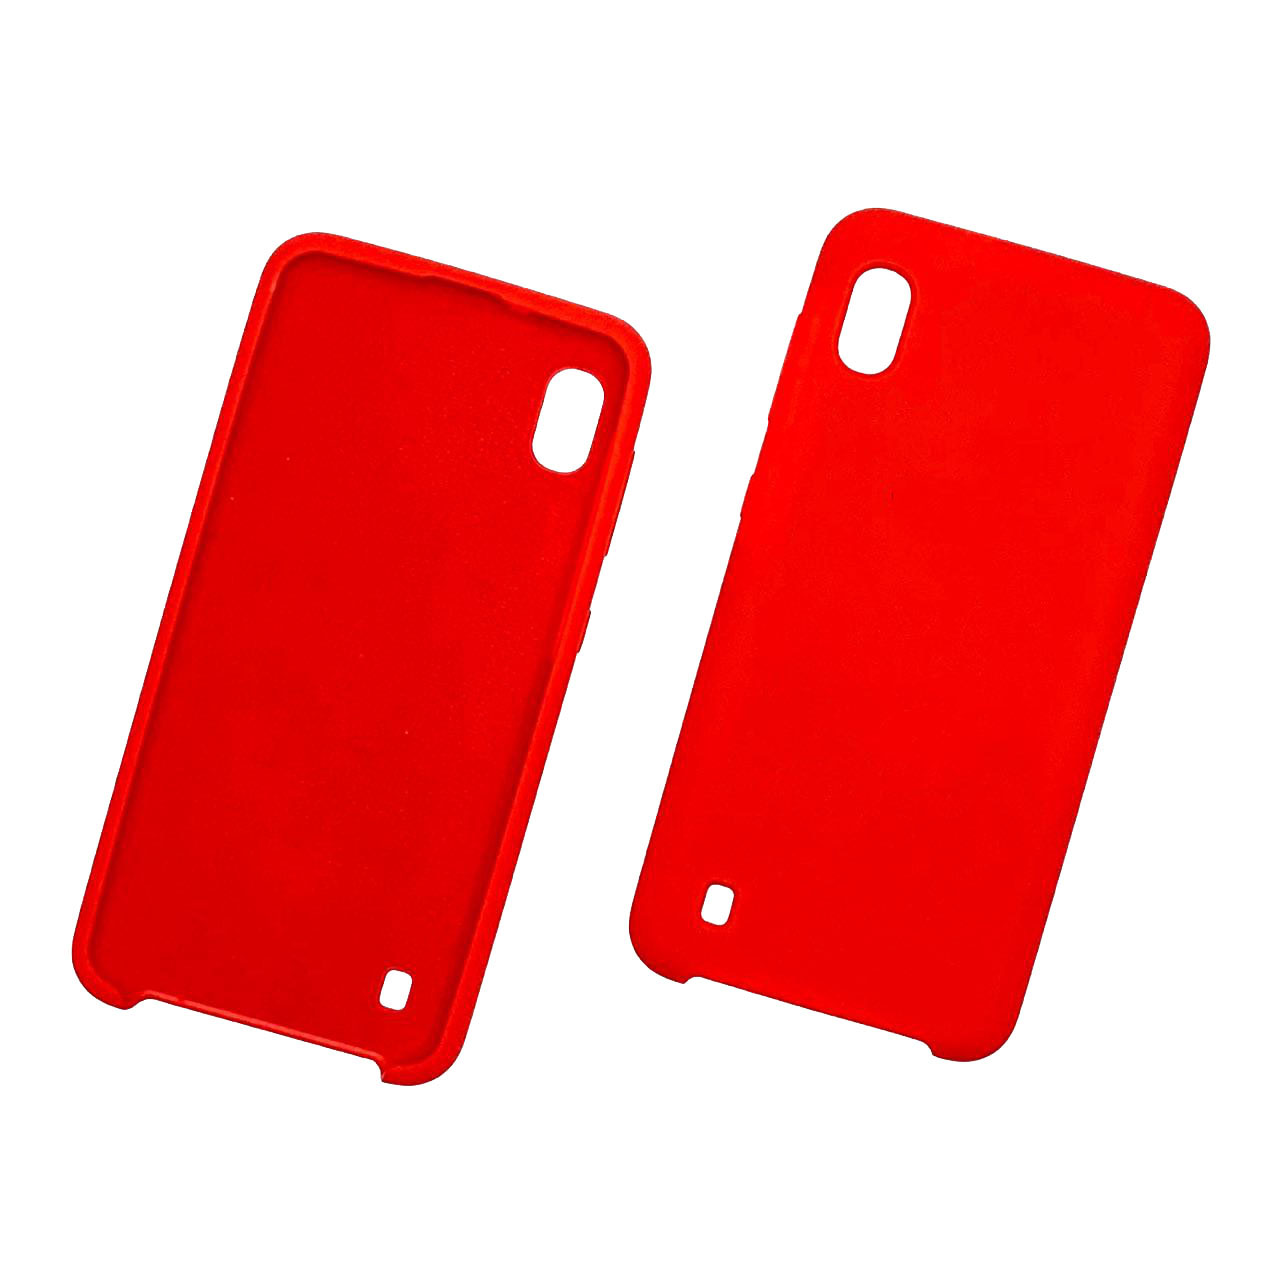 Чехол накладка Silicon Cover для Samsung A10 2019 (SM-A105), силикон, бархат, цвет красный.